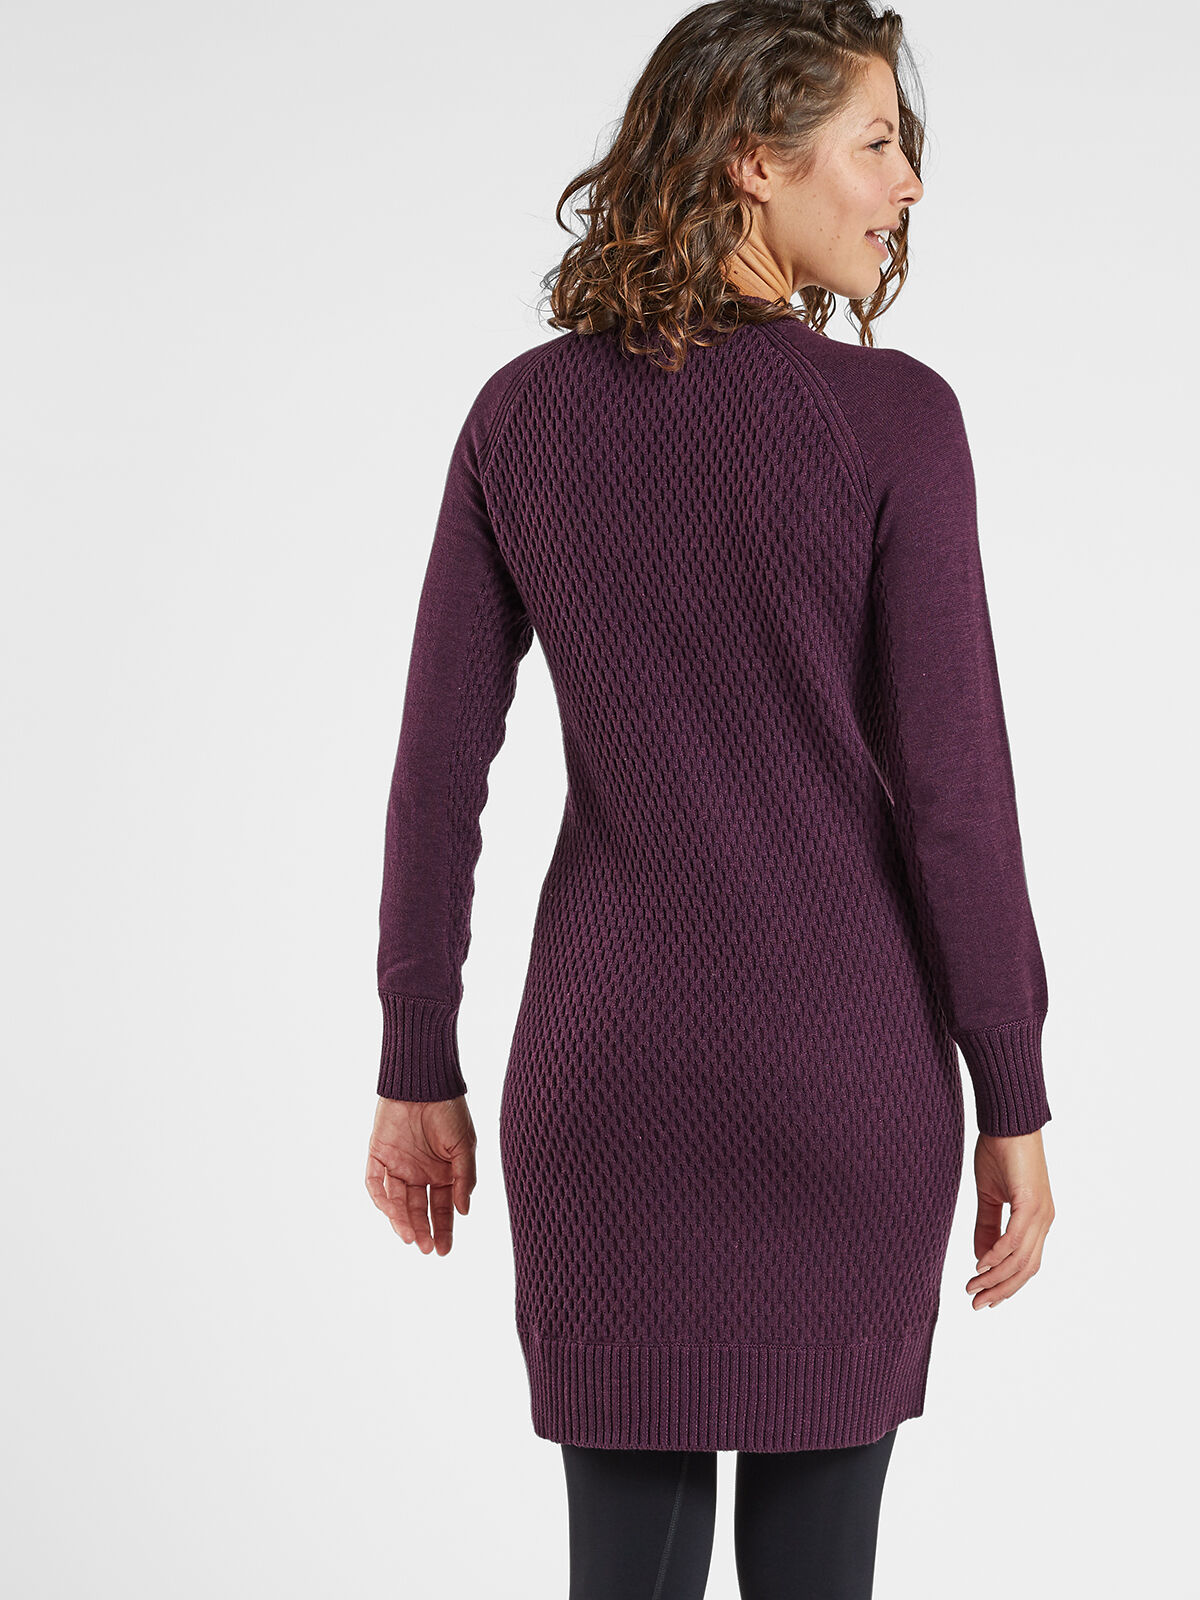 purple dress sweater